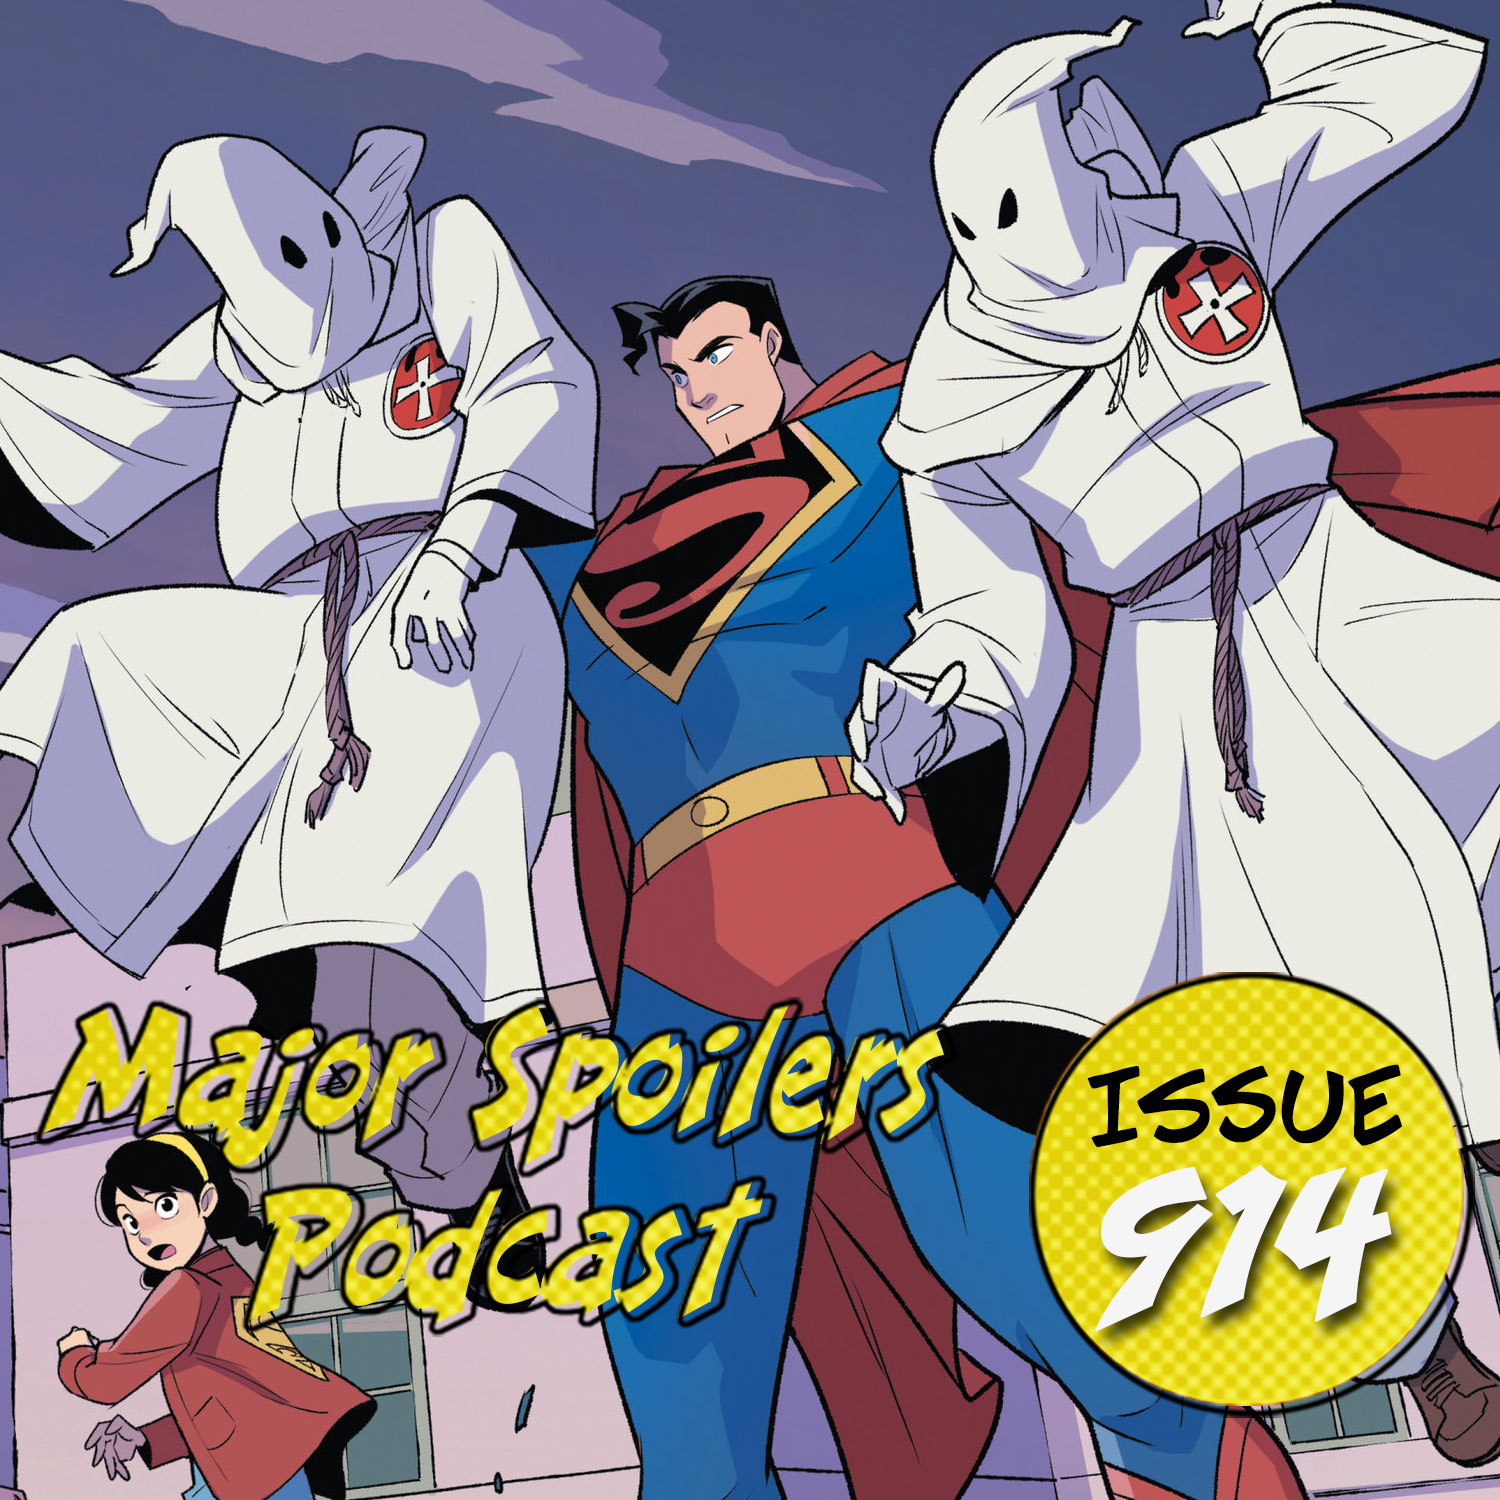 Major Spoilers Podcast #914: Superman Smashes the Klan